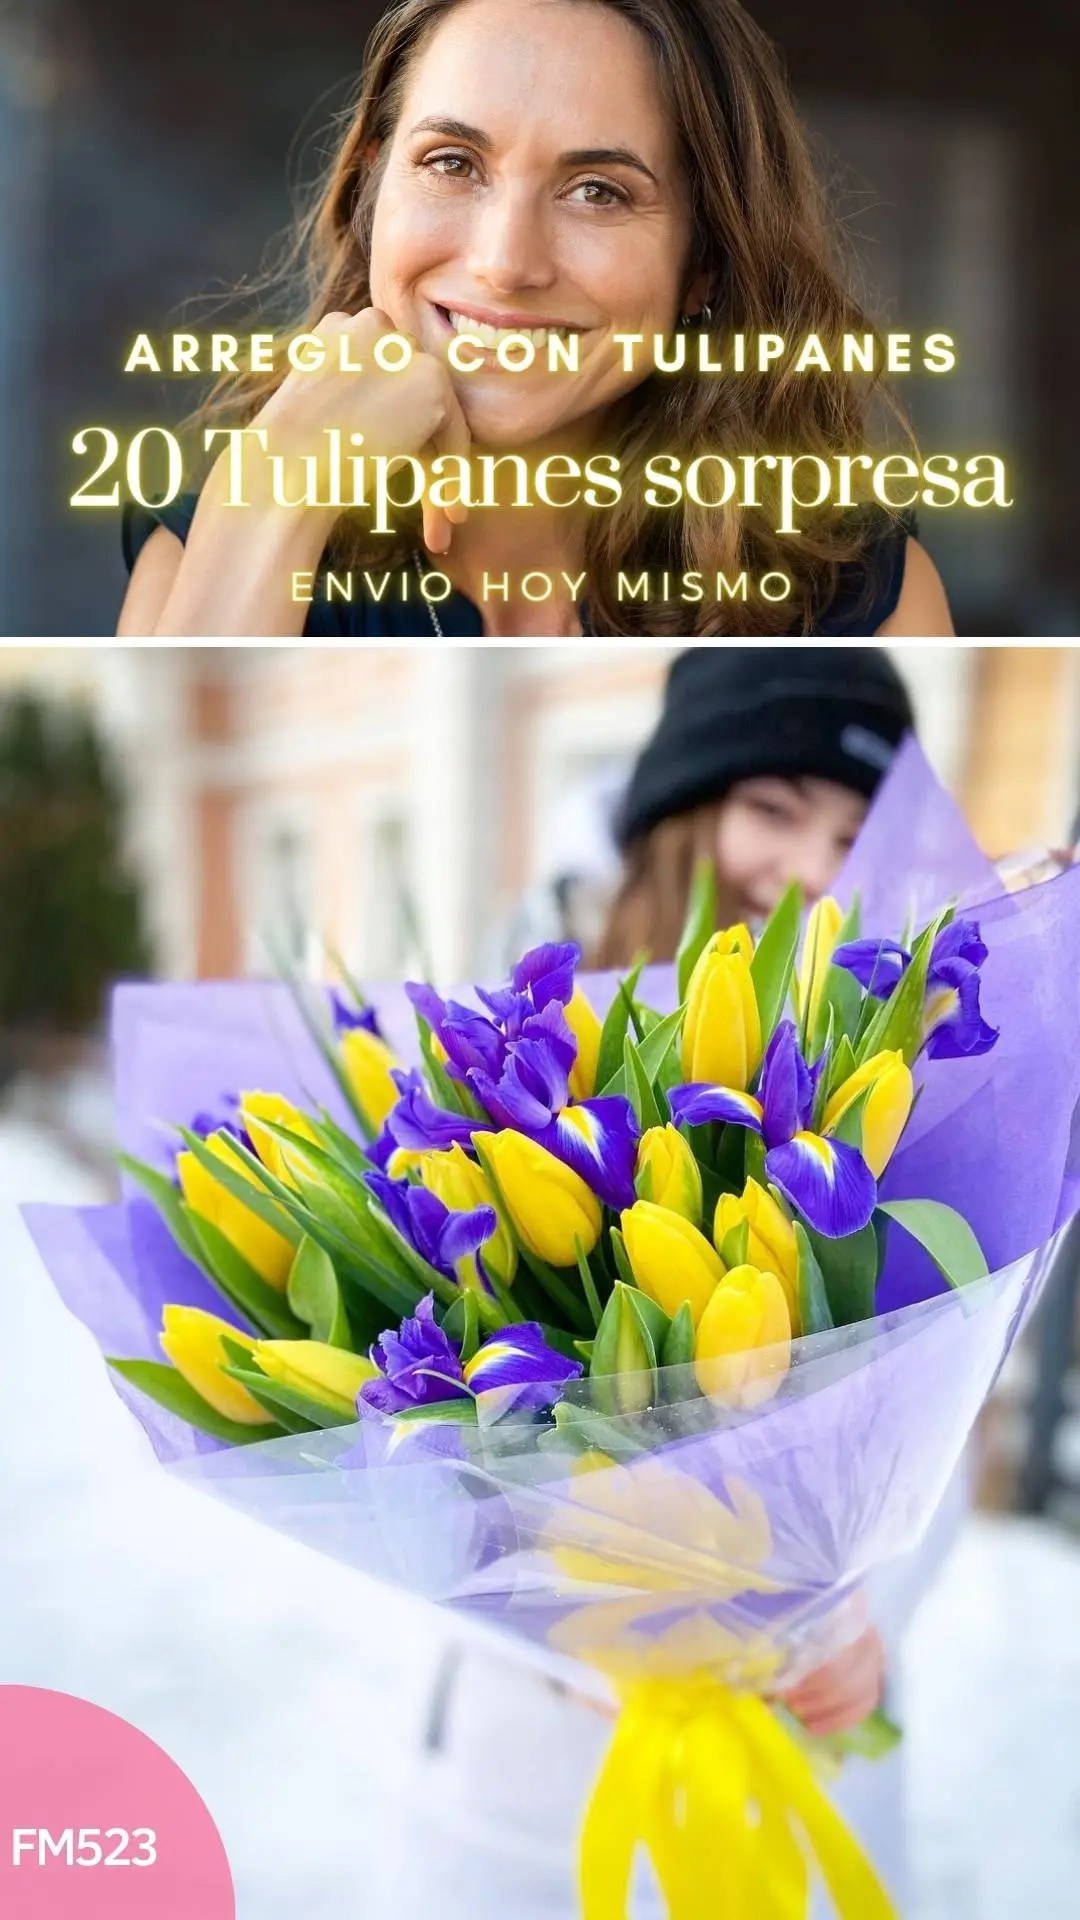 Ramo con 20 tulipanes sorpresa